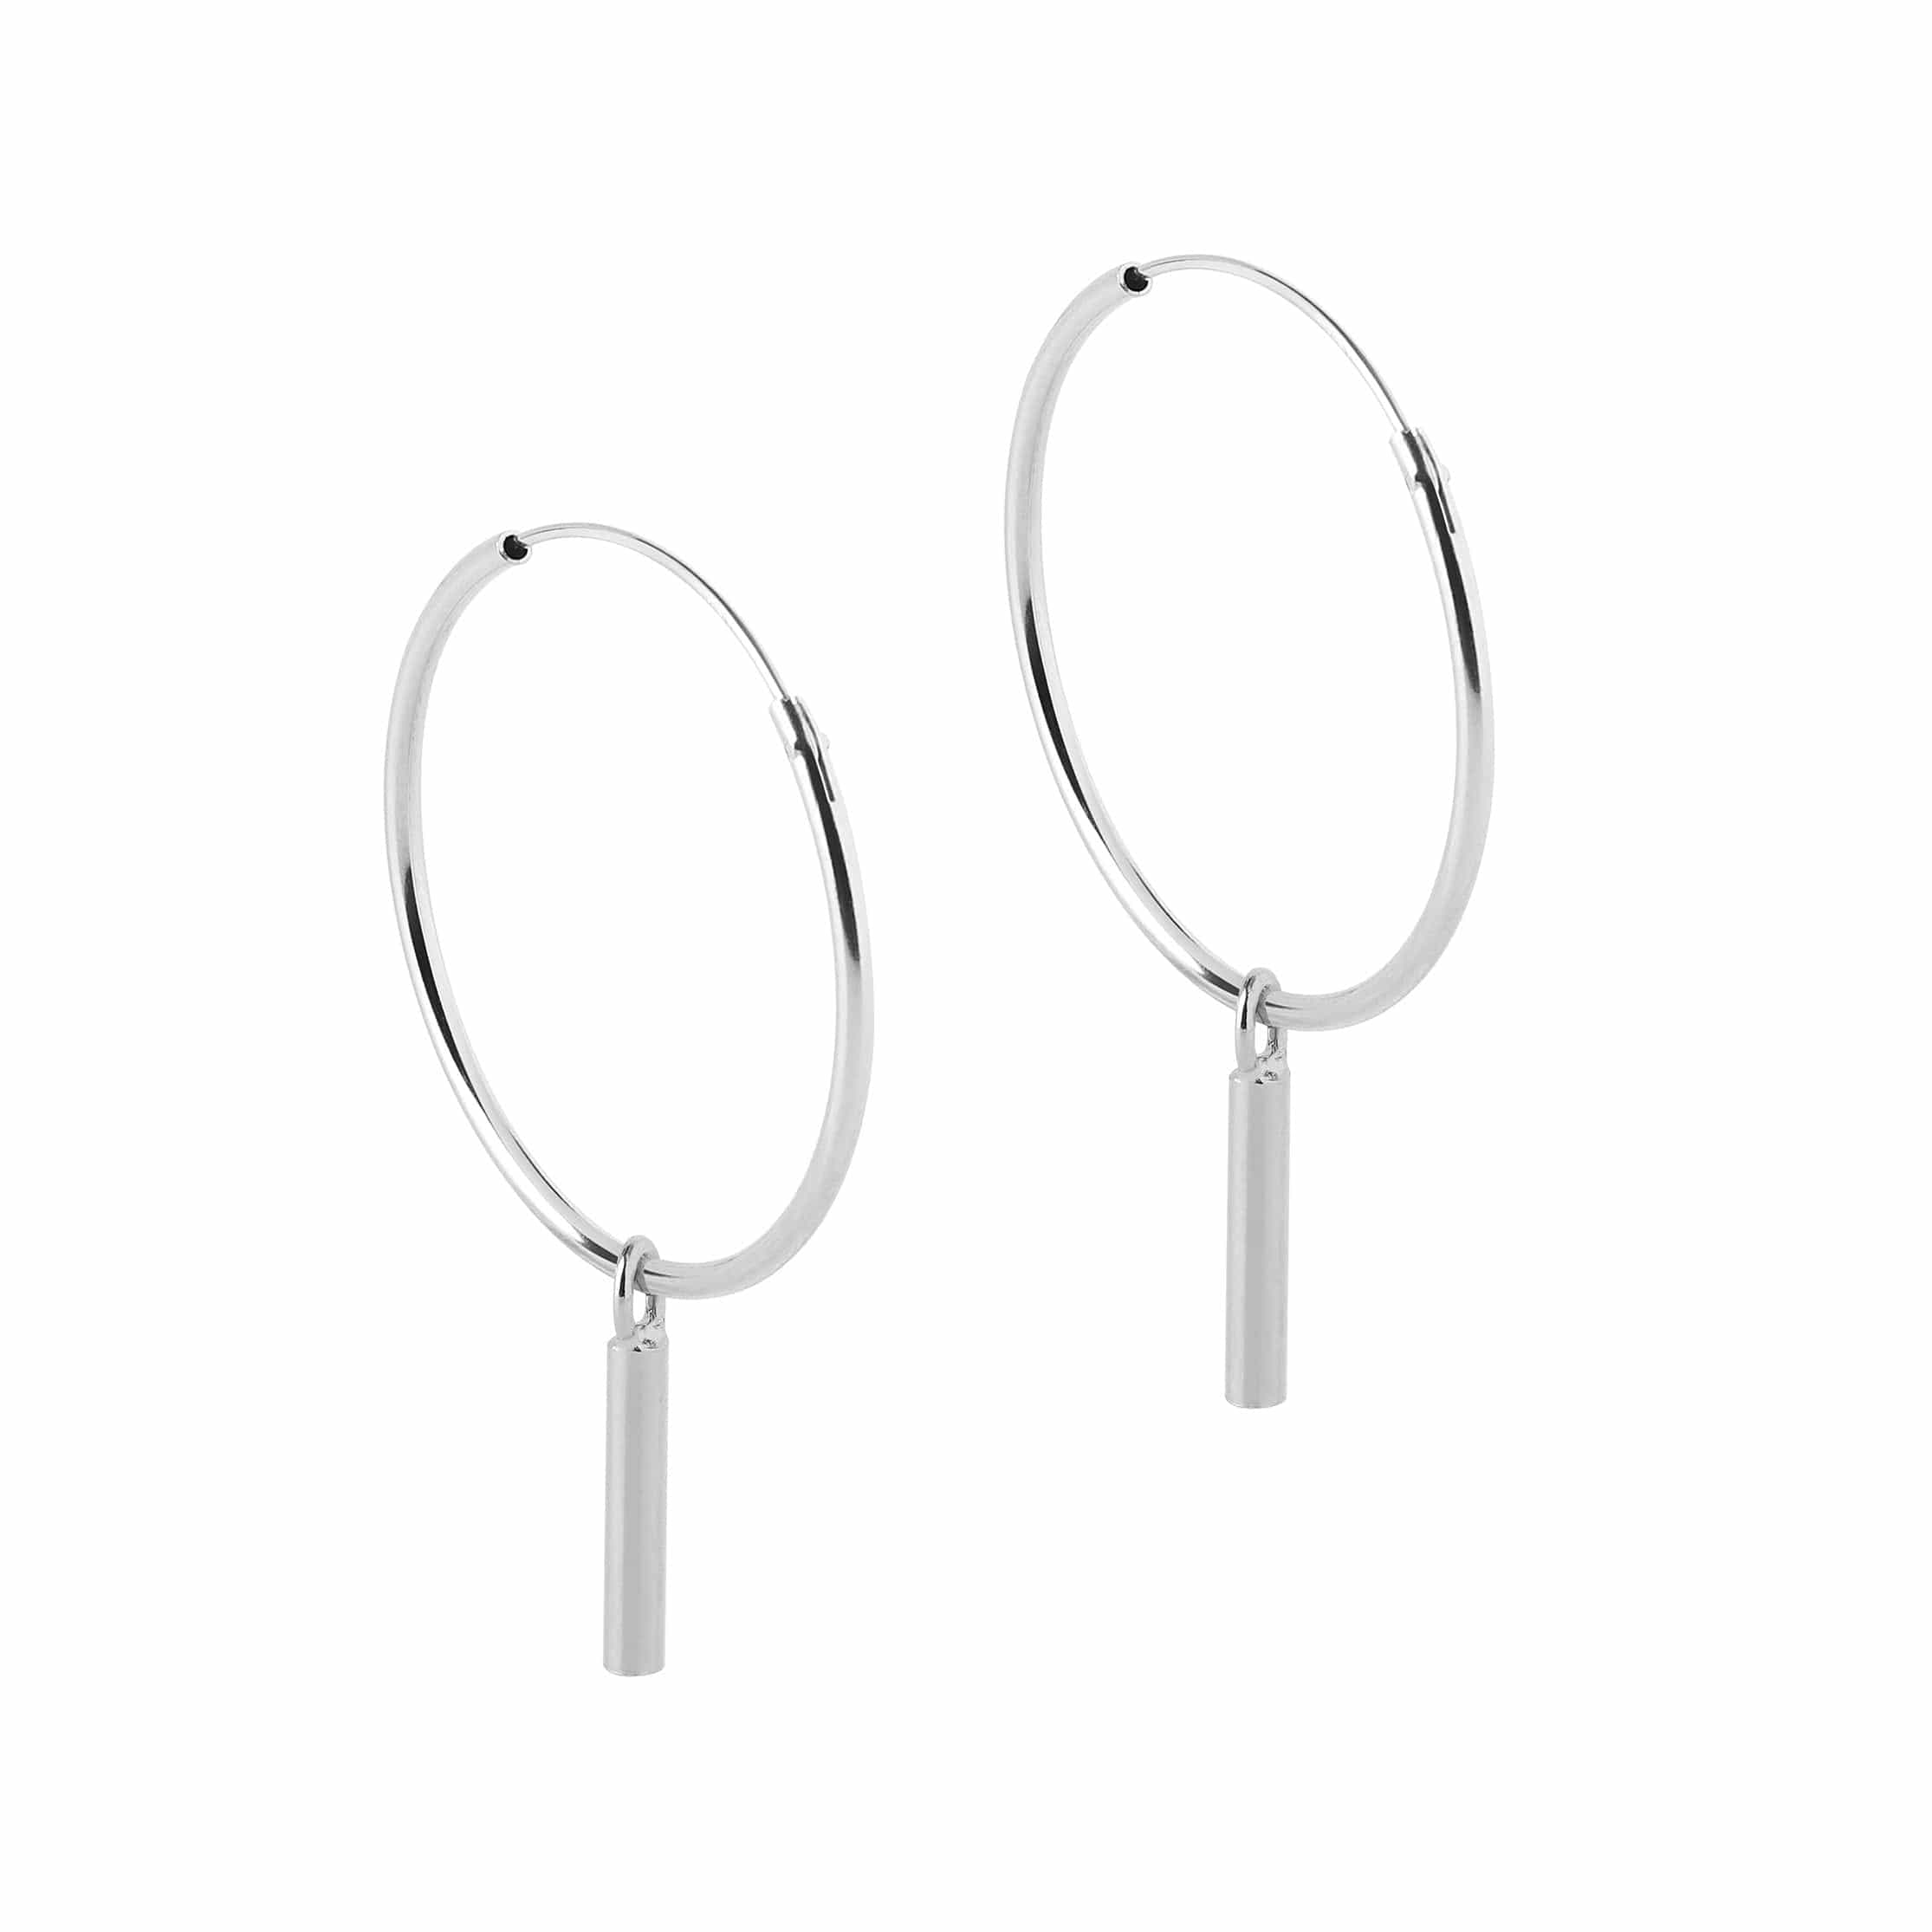 Silver Hoop Earrings with Long Rod 22 MM